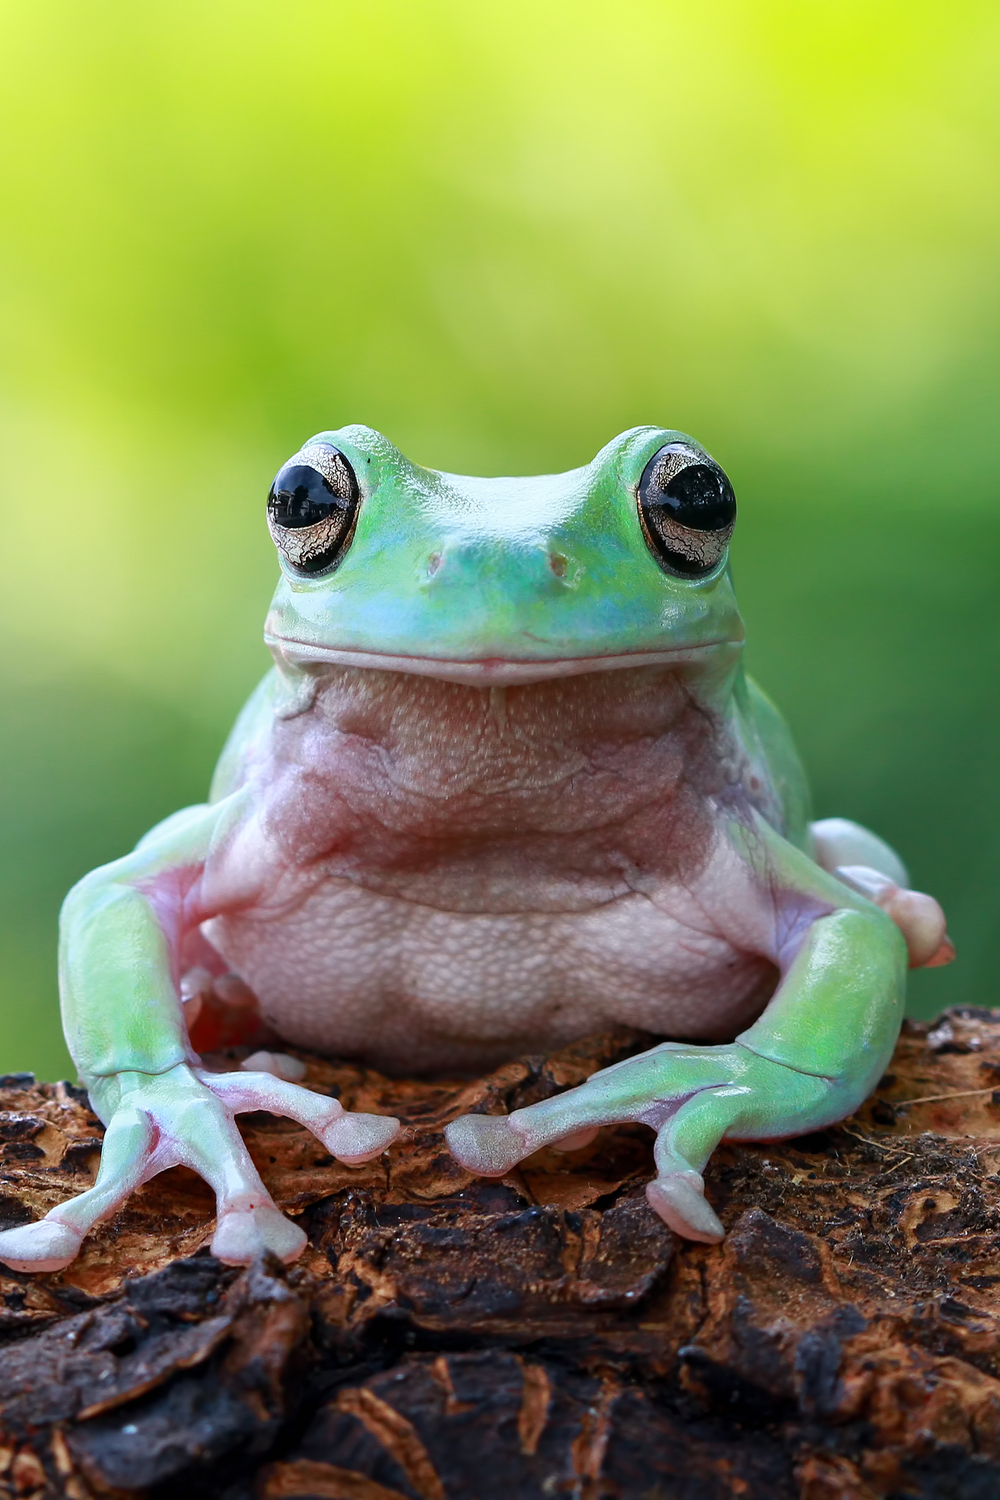 A Talking Frog